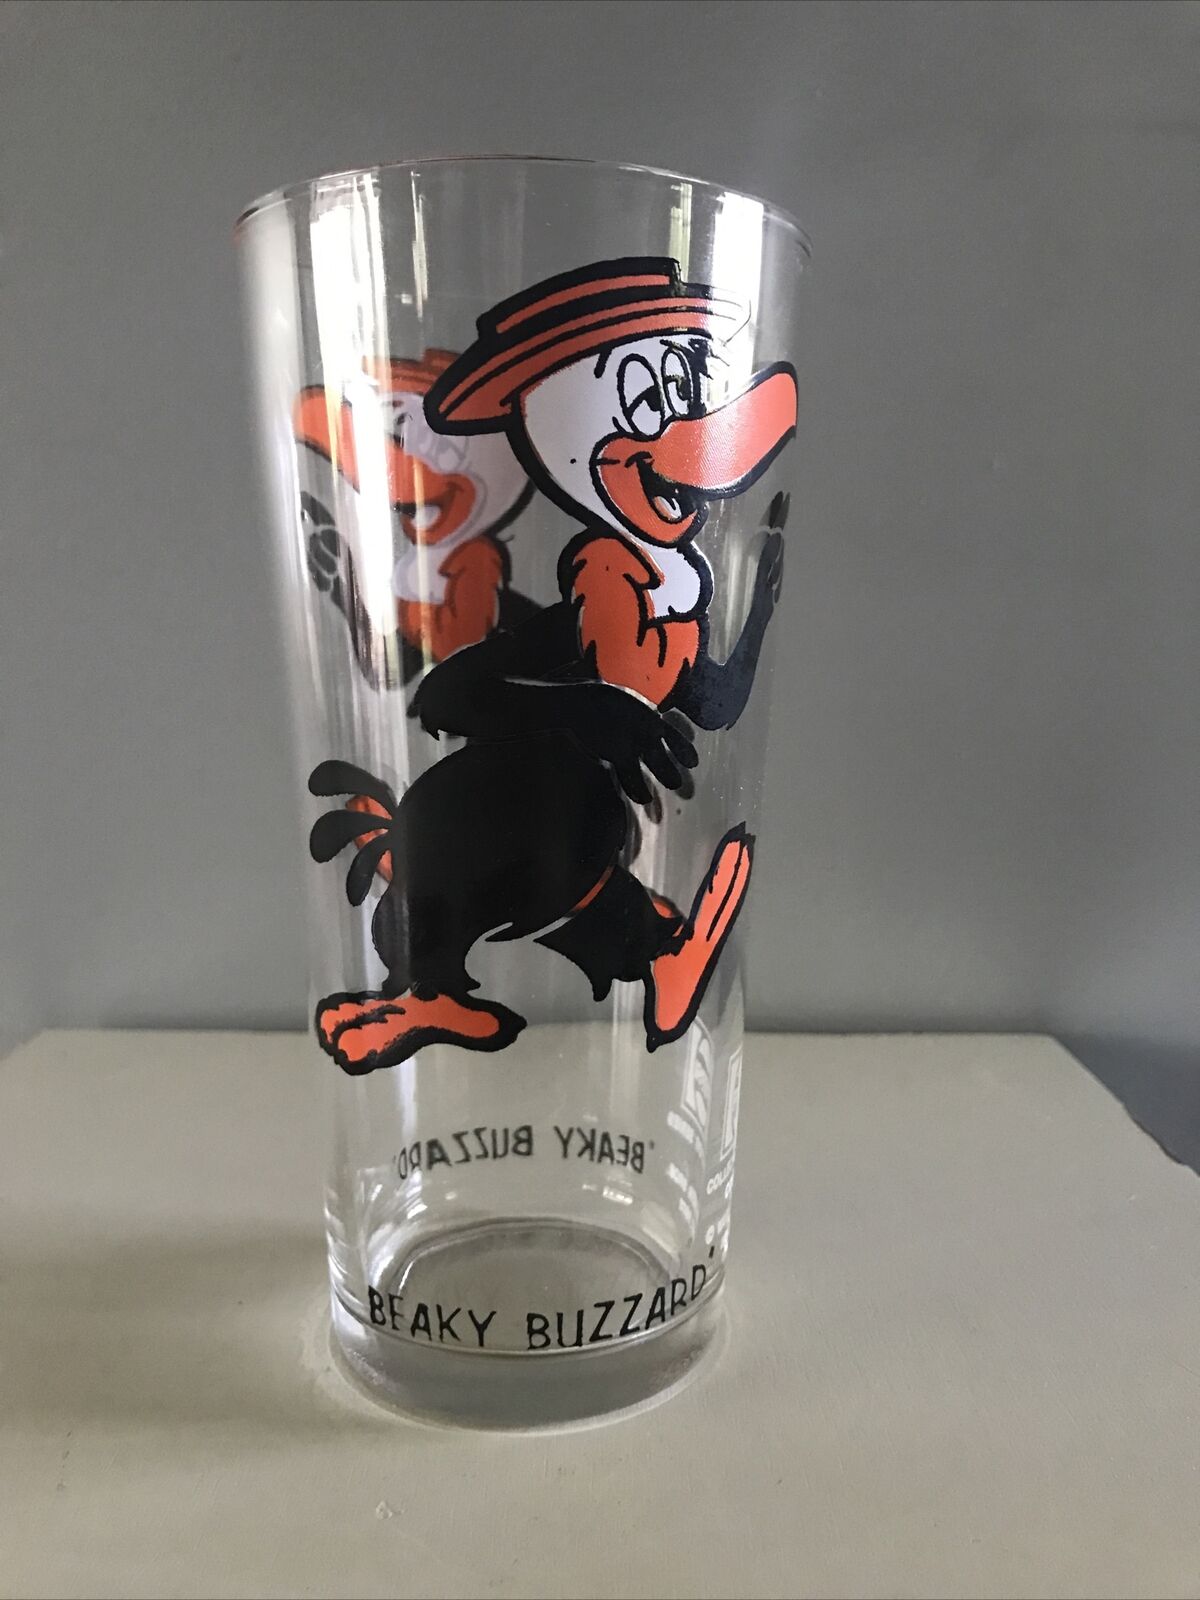 1973 Vtg Looney tunes Beaky Buzzard Pepsi collectors Glass Cup